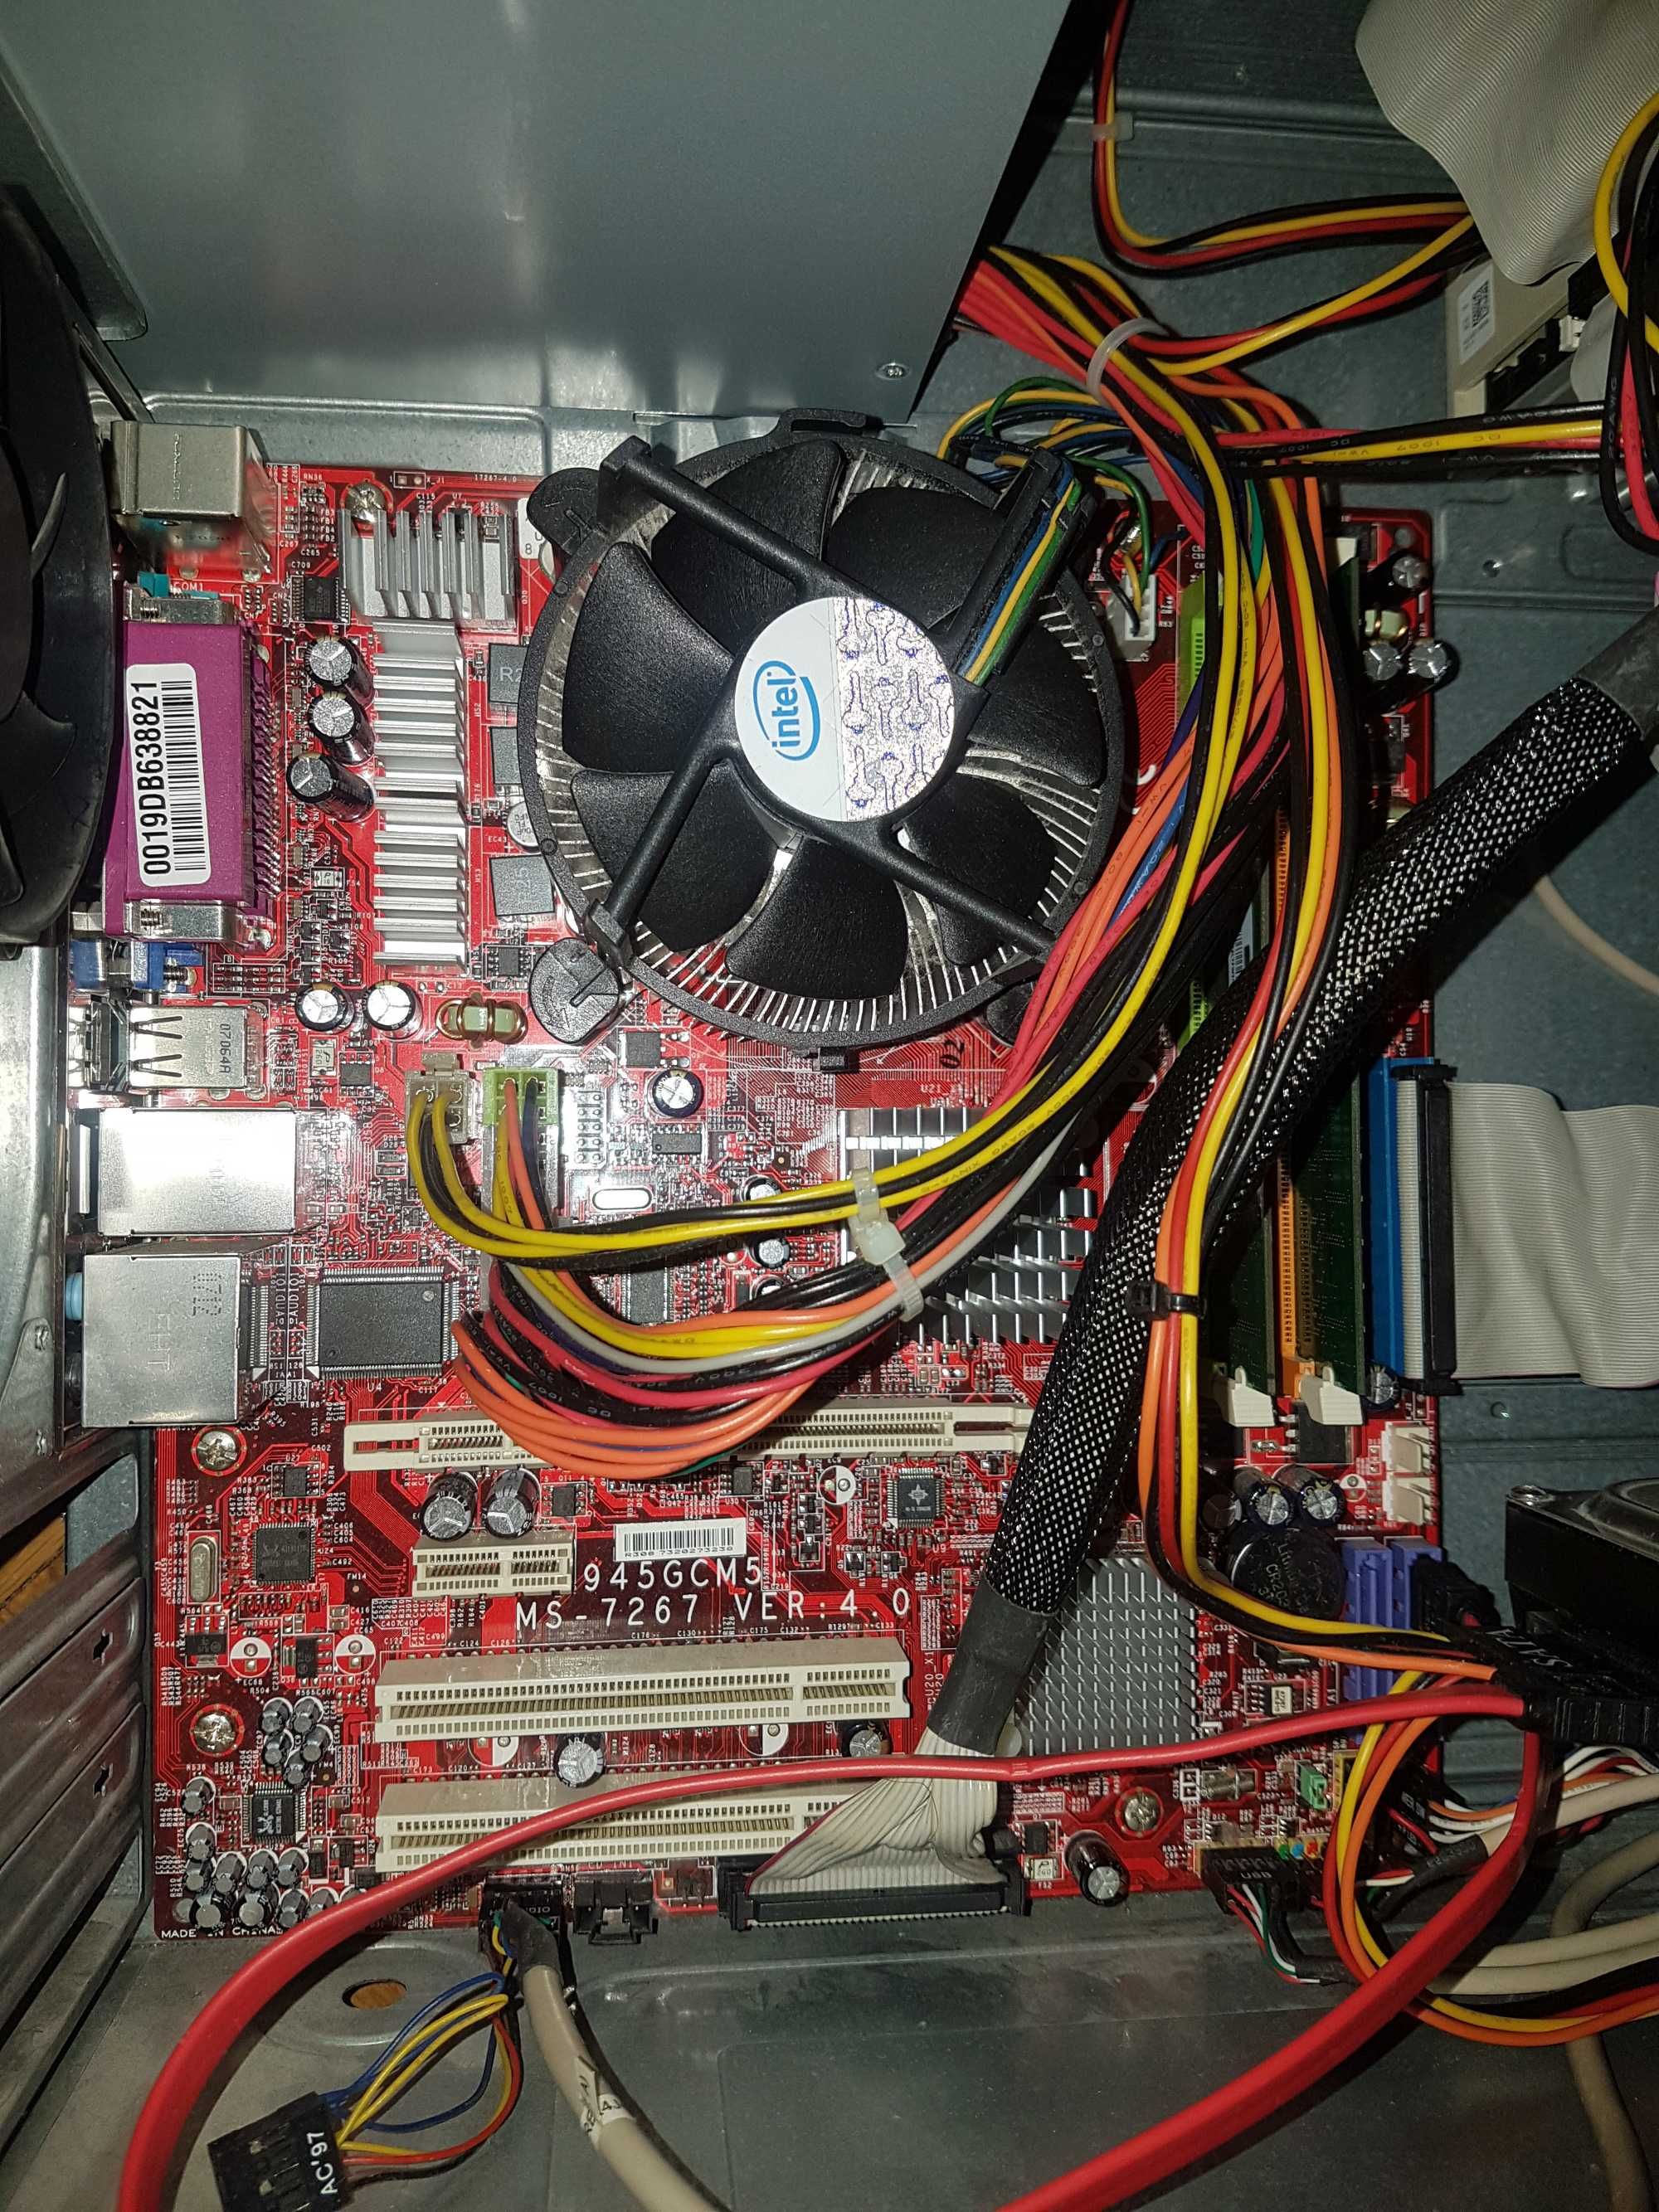 Torres micro ATX, motherboard MSI-7222 v2, CPU Pentium, teclado, ratos